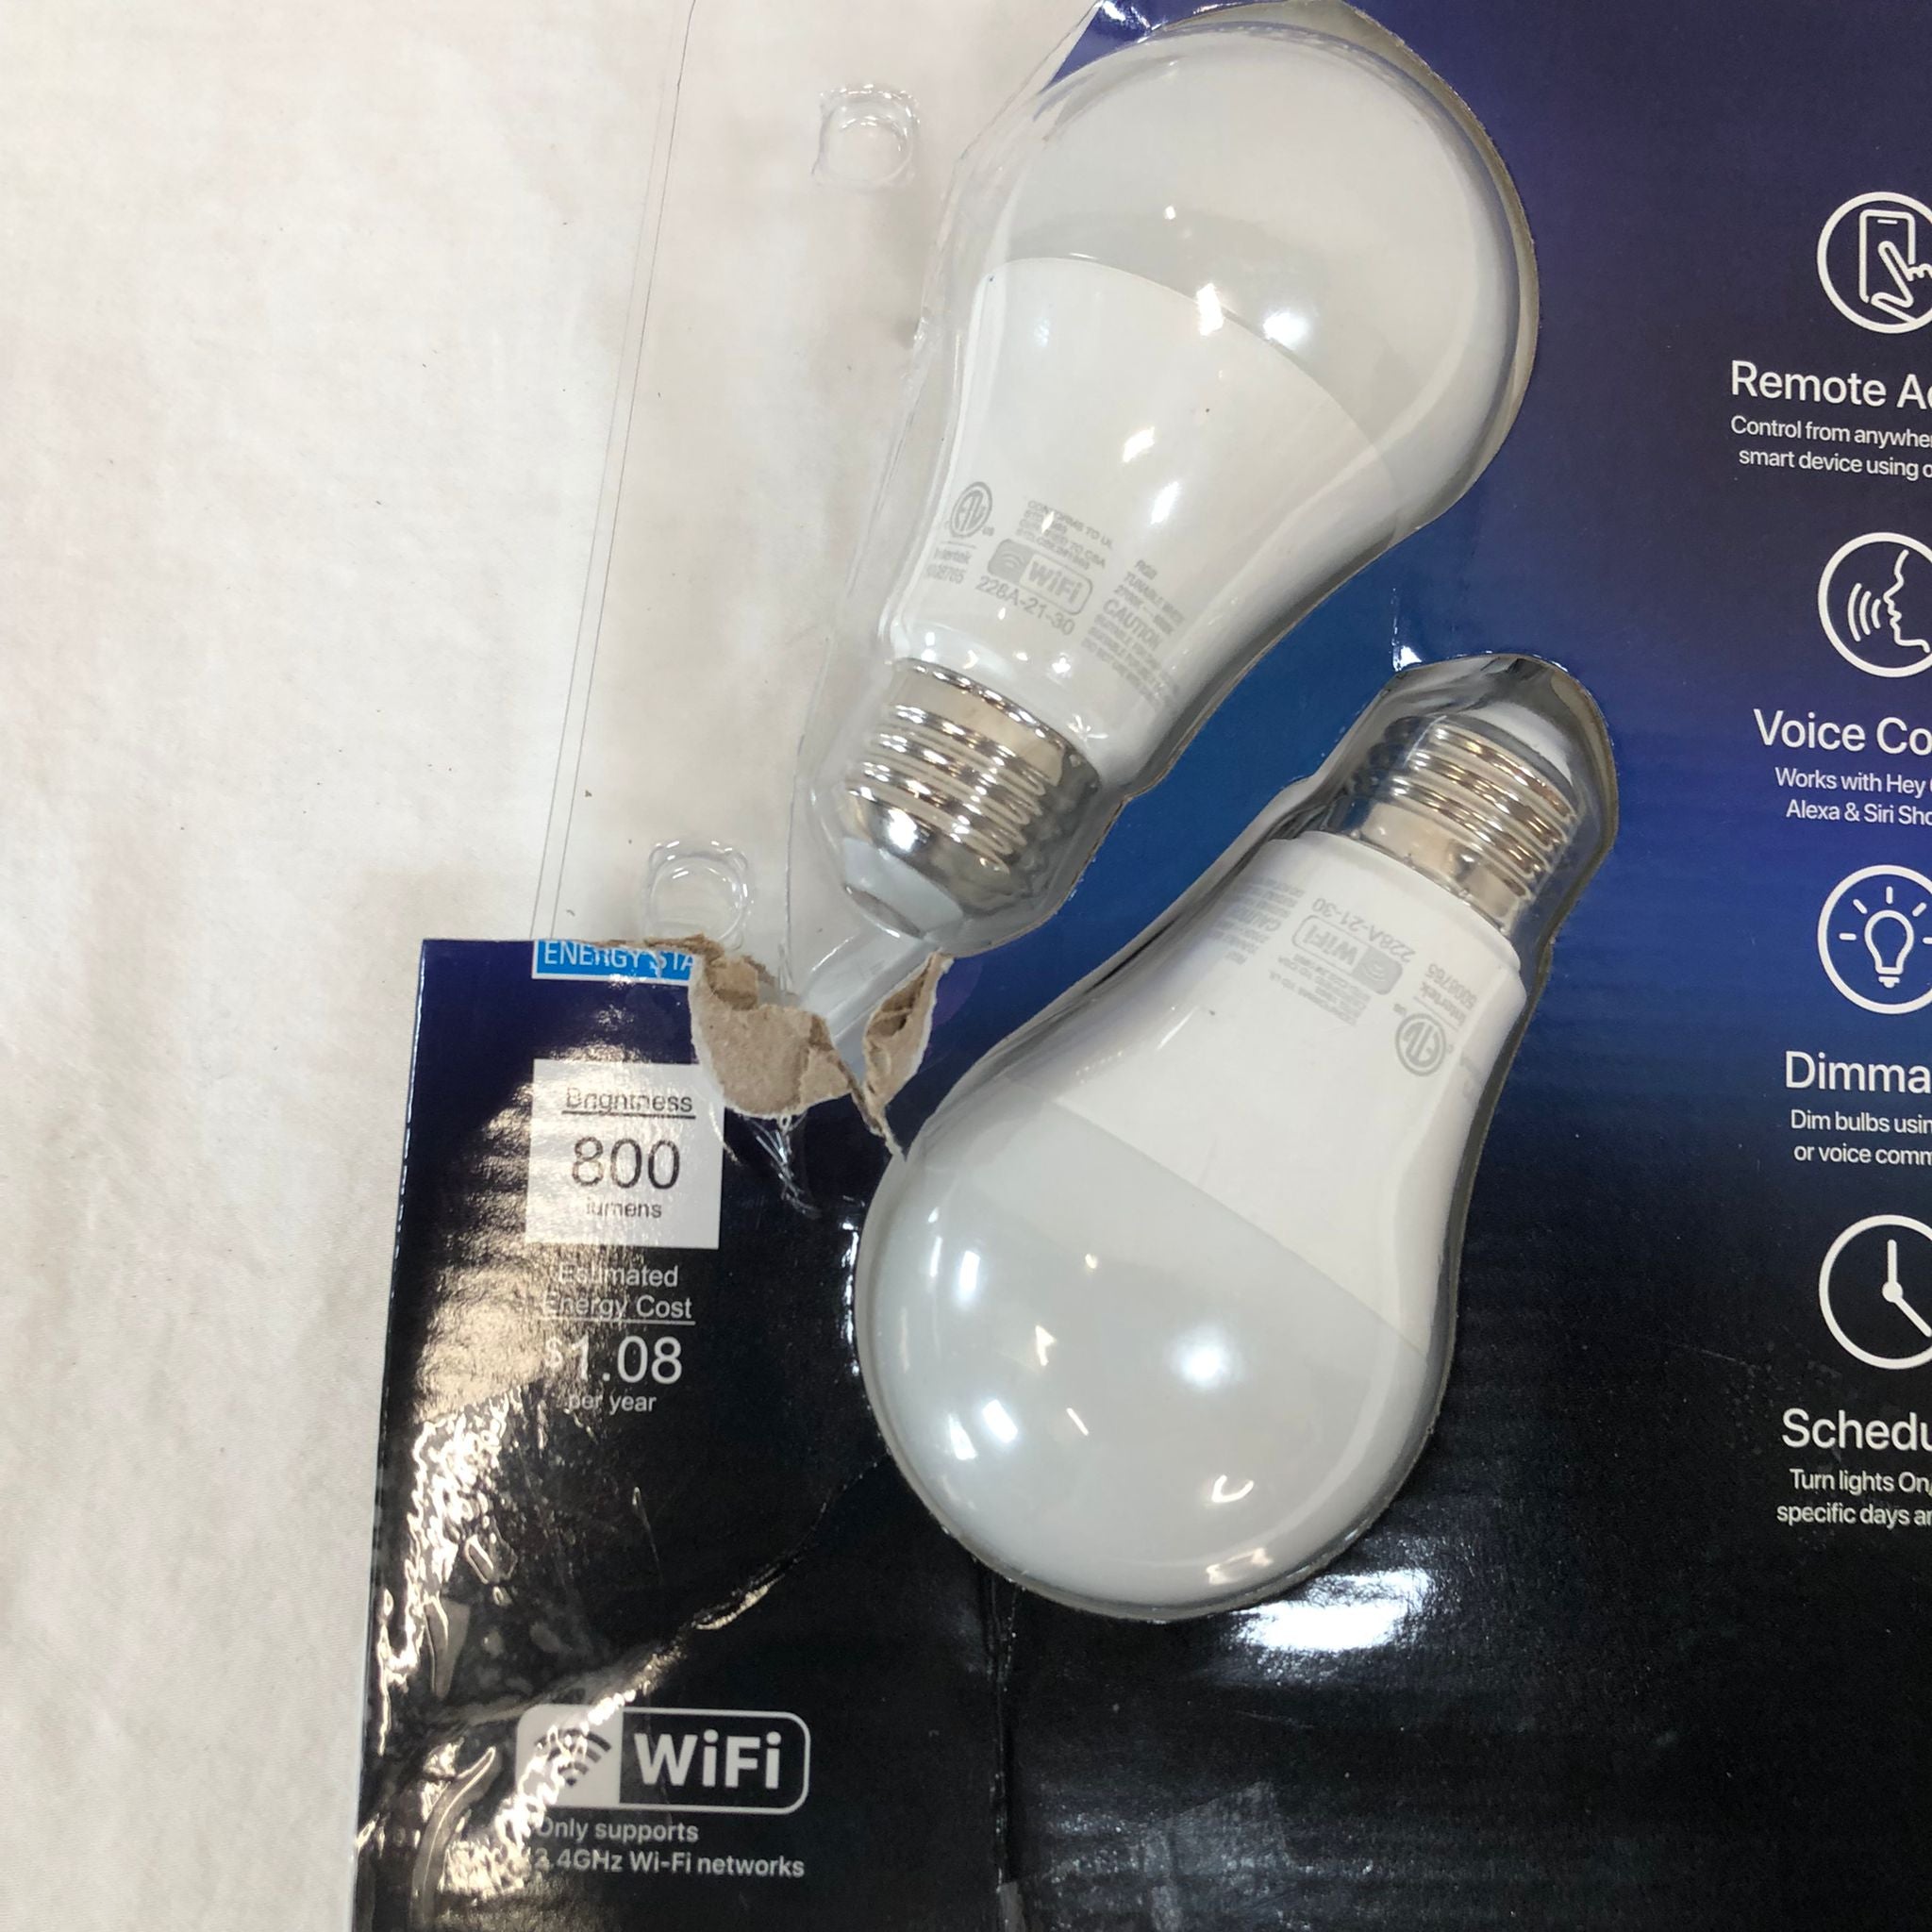 Feit Eletric Wi-Fi Smart Bulbs - 2Pack